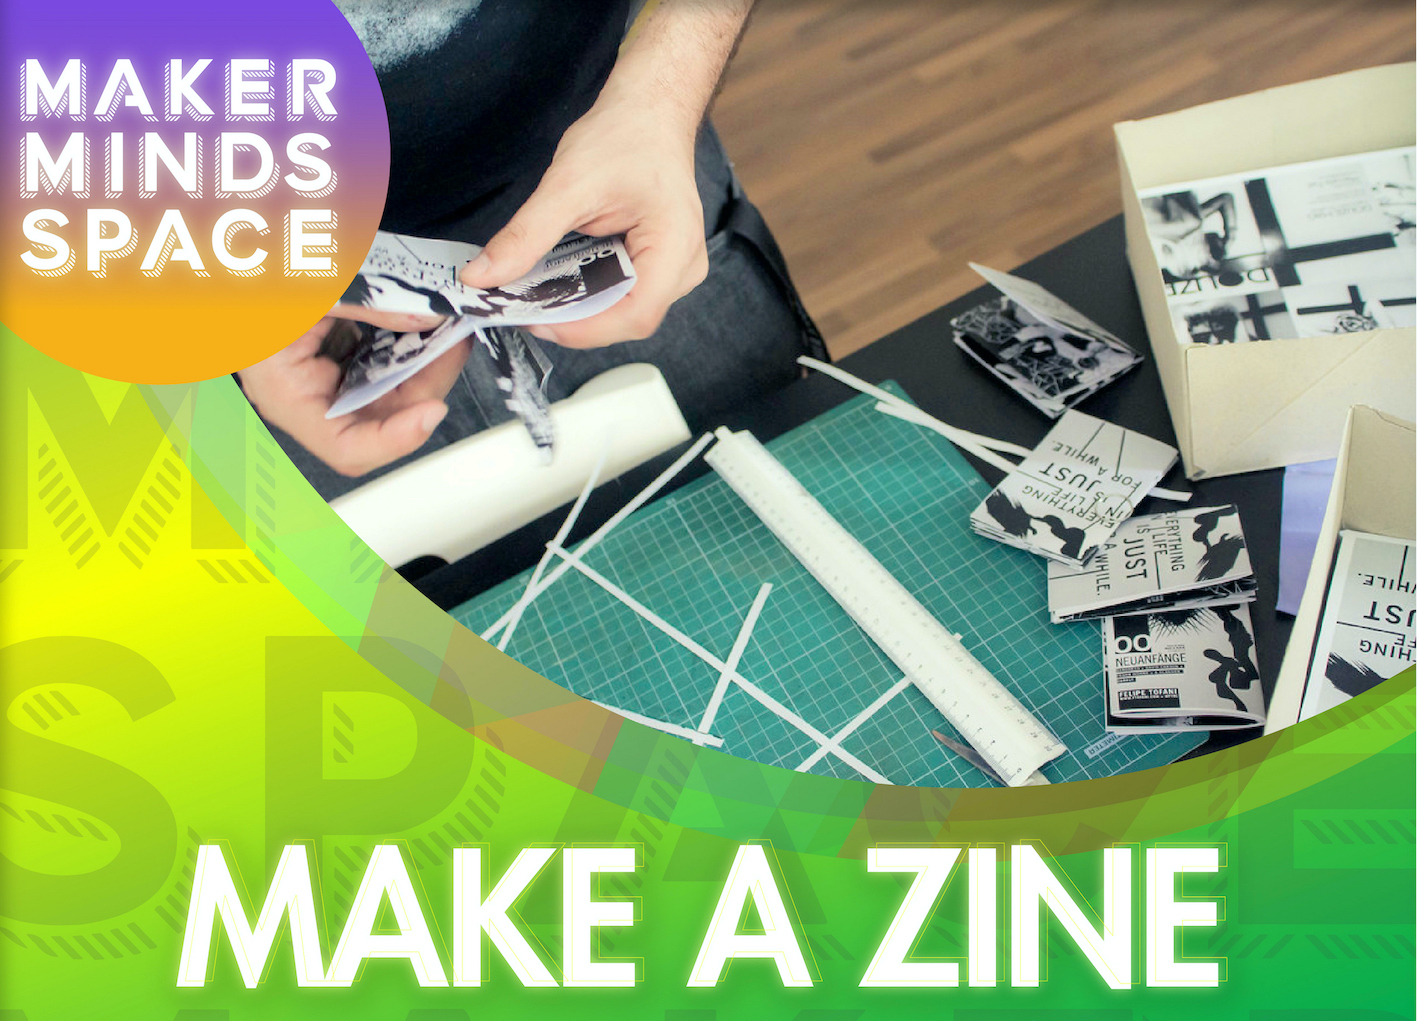 MakerMinds Space Make a Zine poster